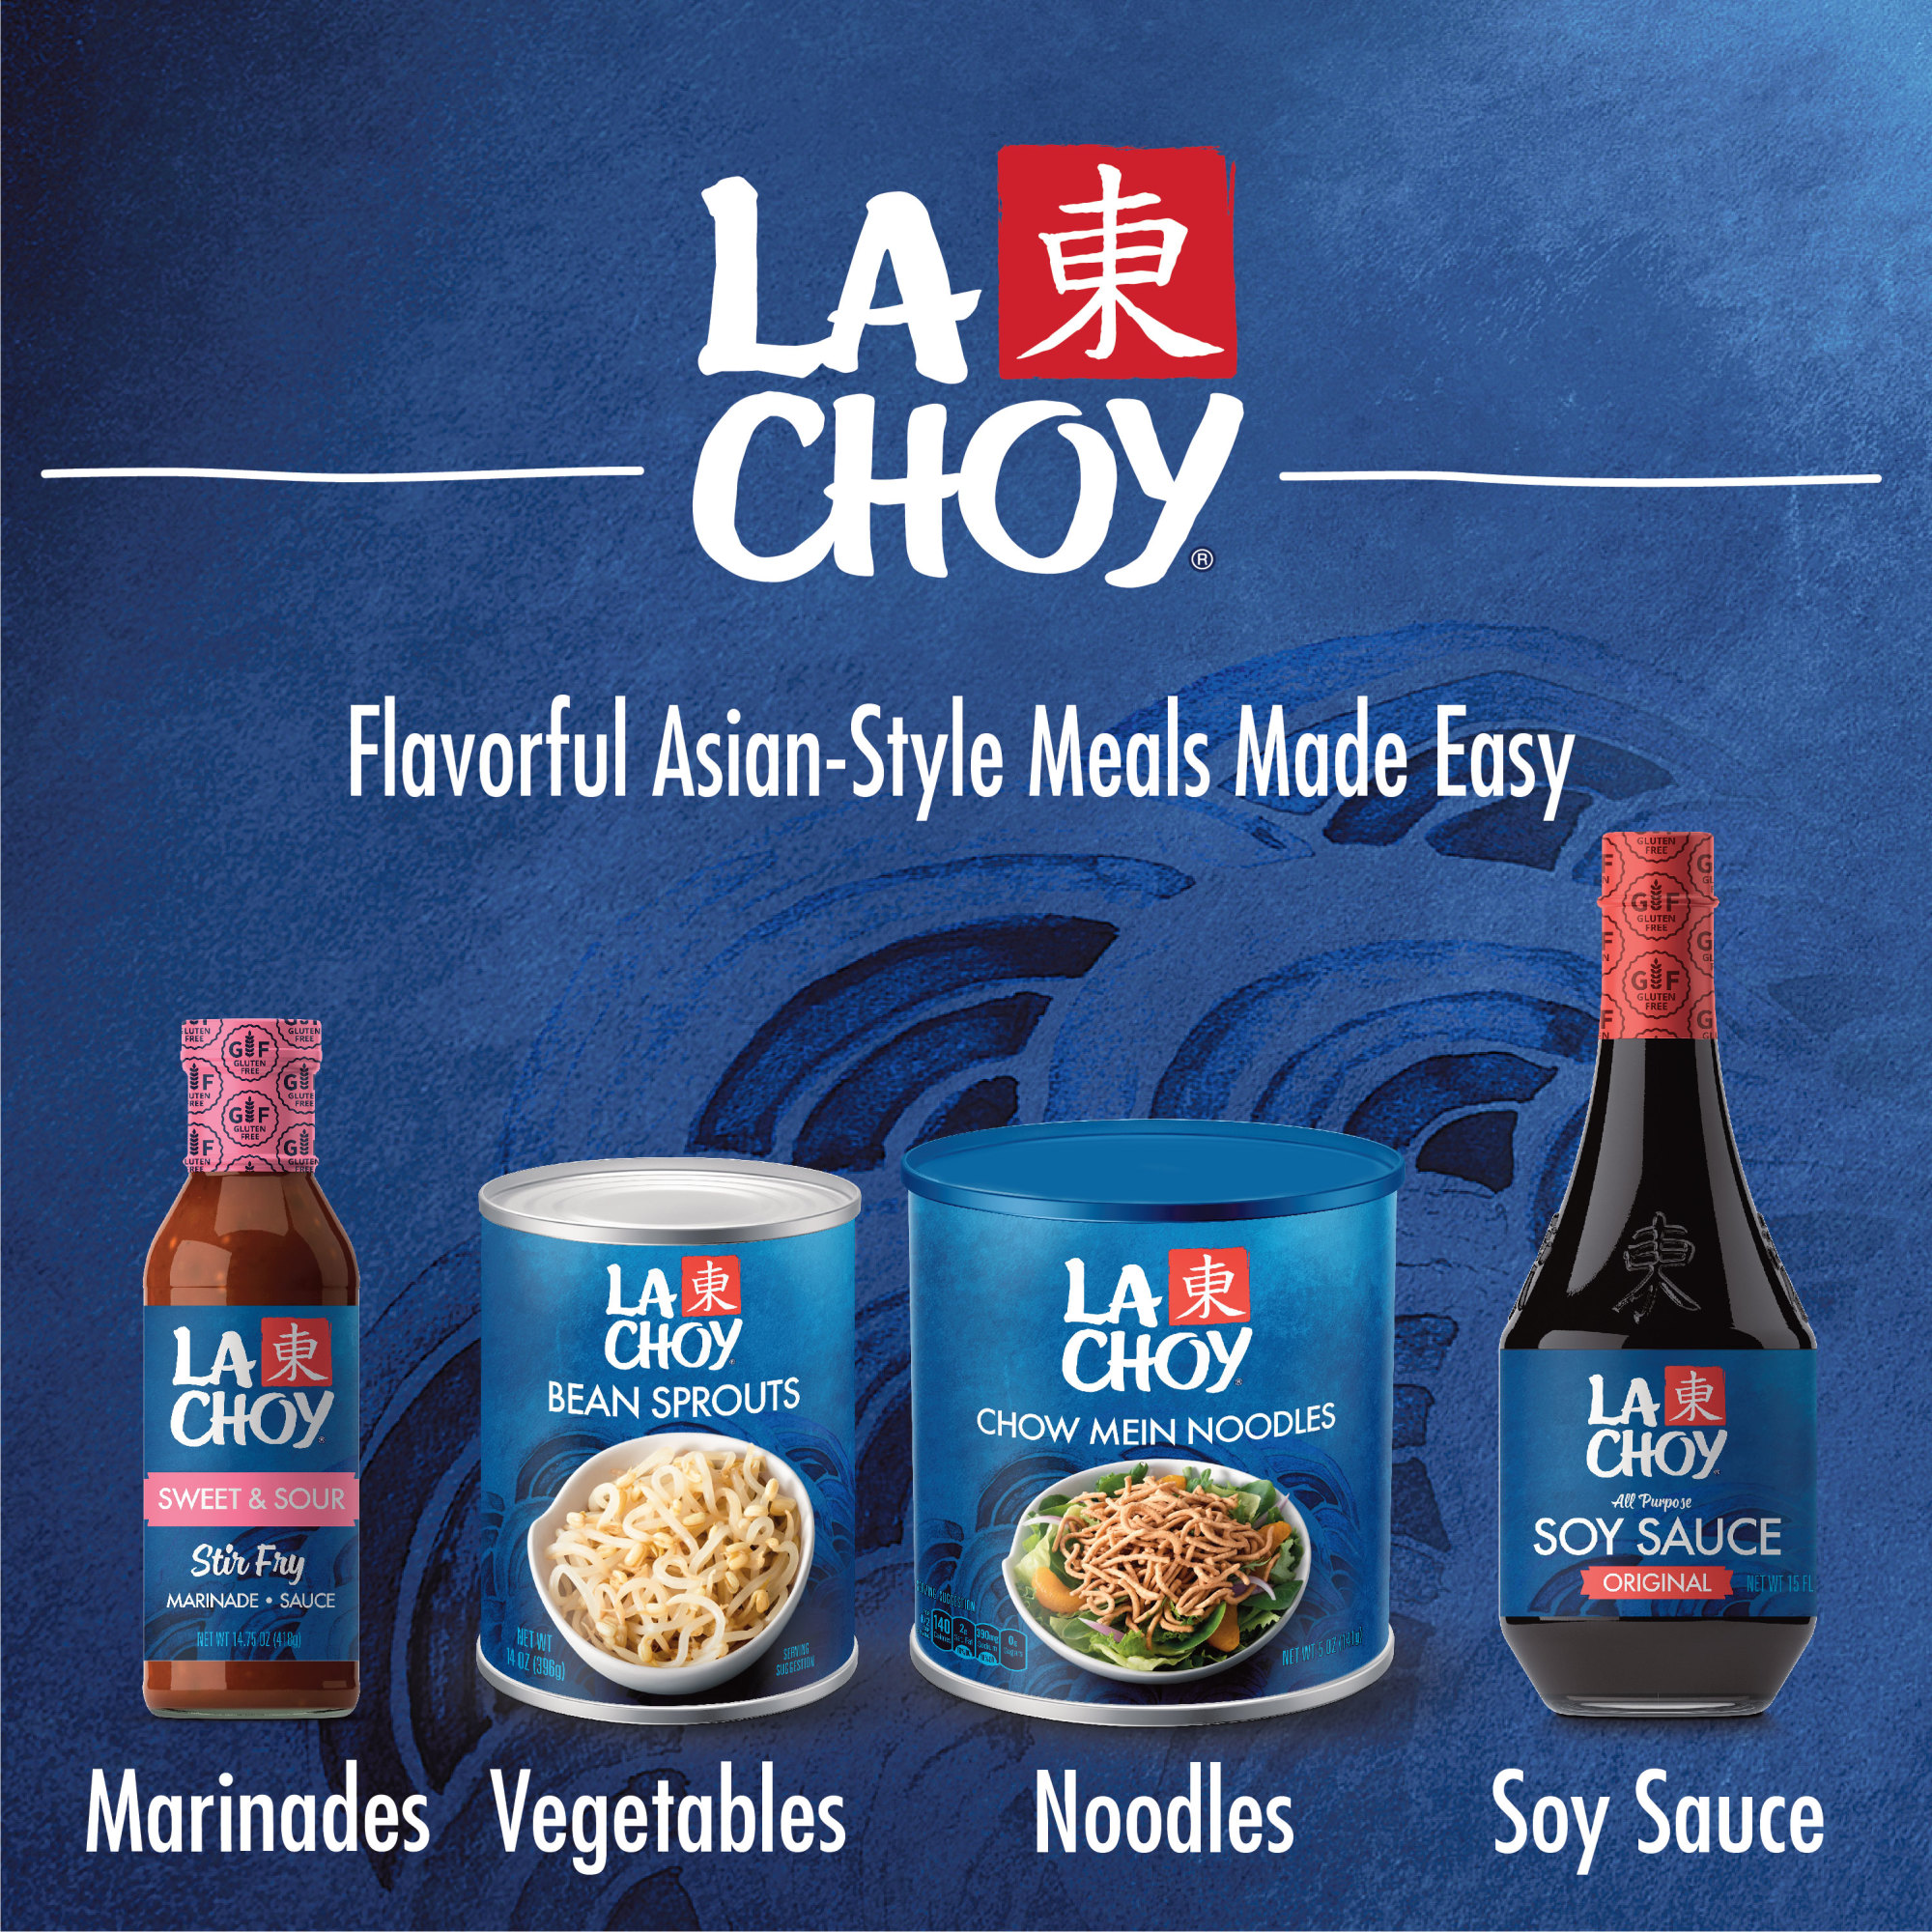 La Choy Chow Mein Noodles, 5 oz Can - image 2 of 5